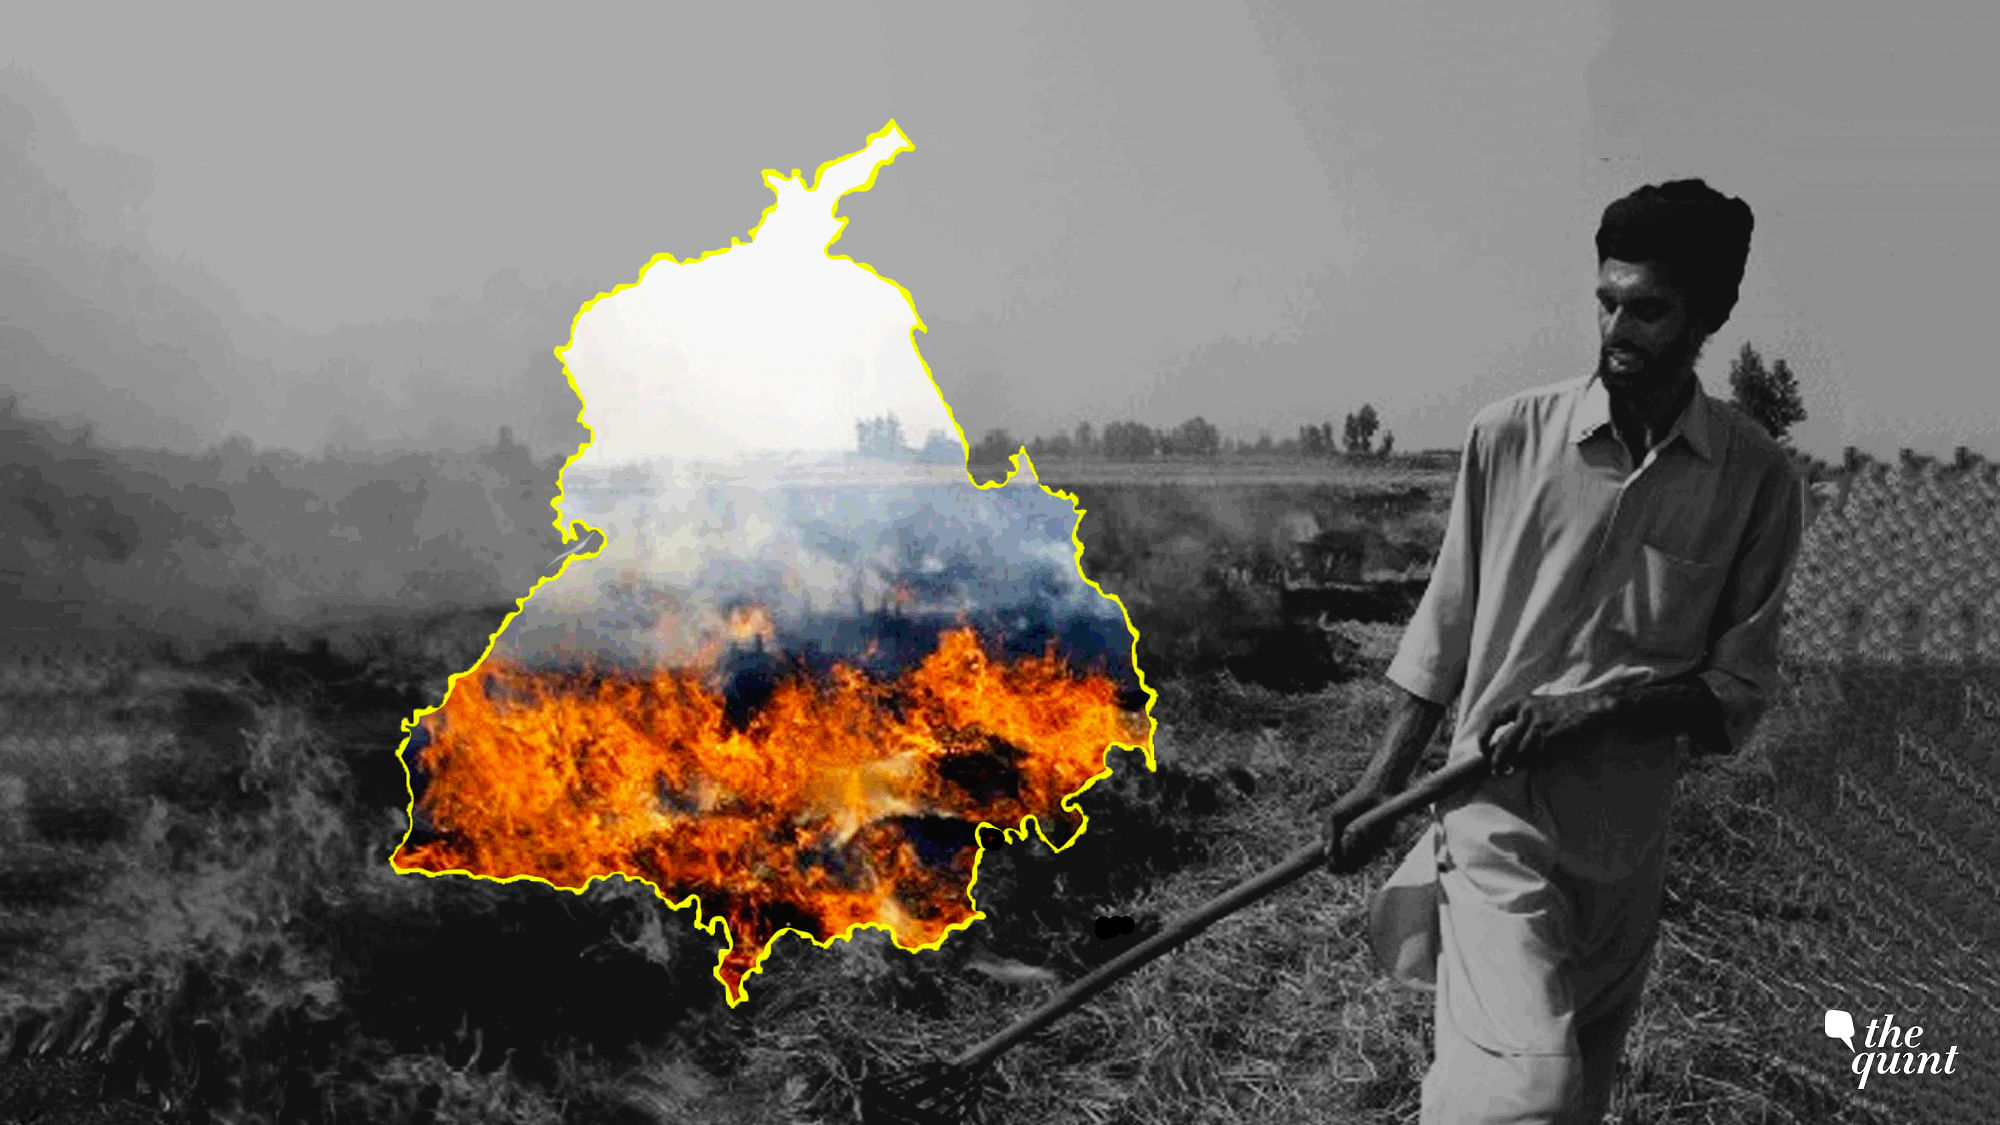 Image of crop burning in Punjab used for representational purposes.